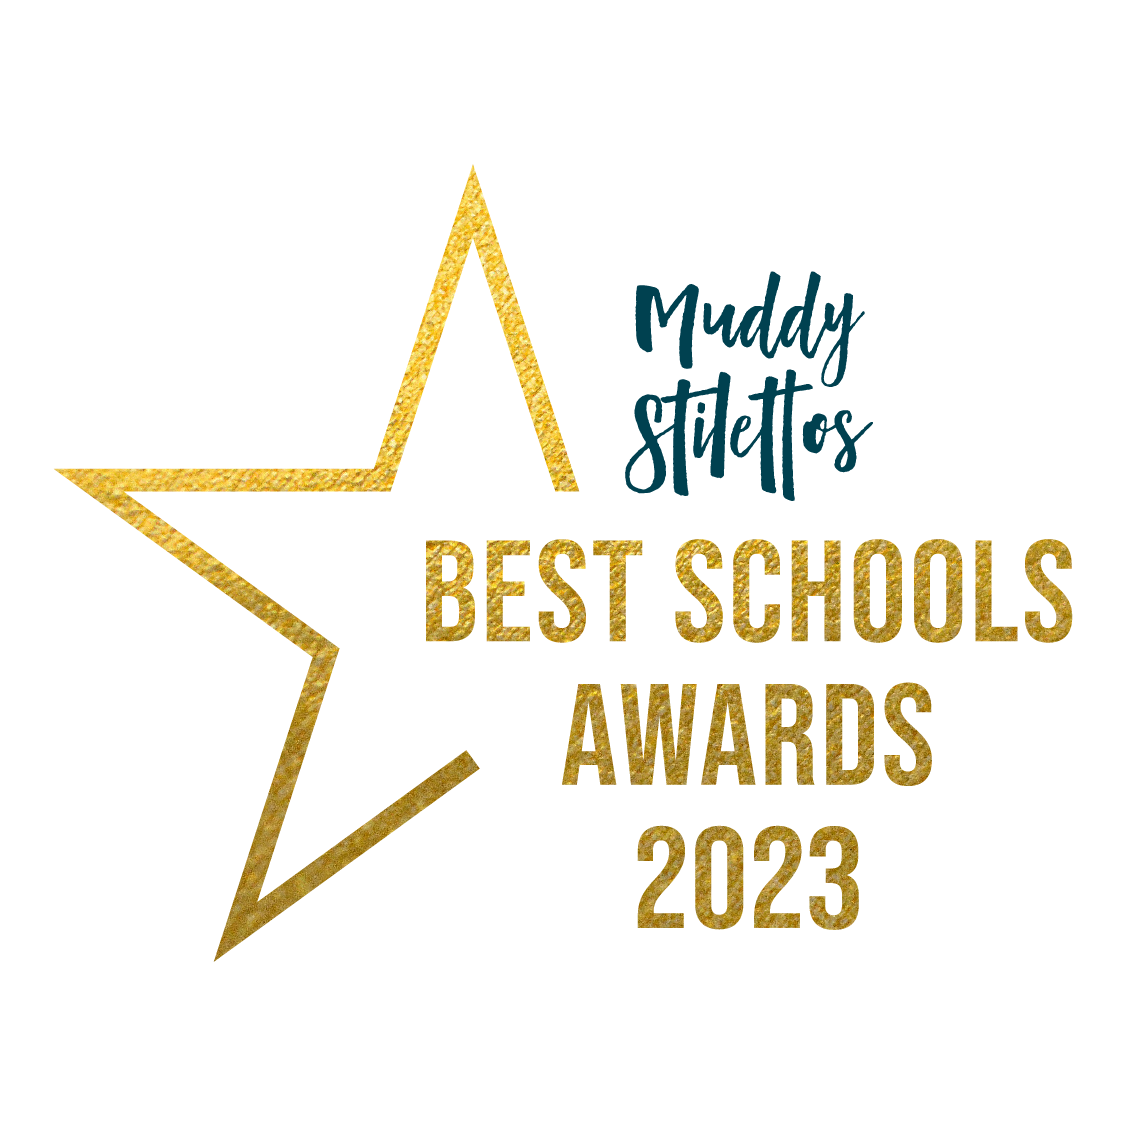 Muddy School Awards 2022 logo